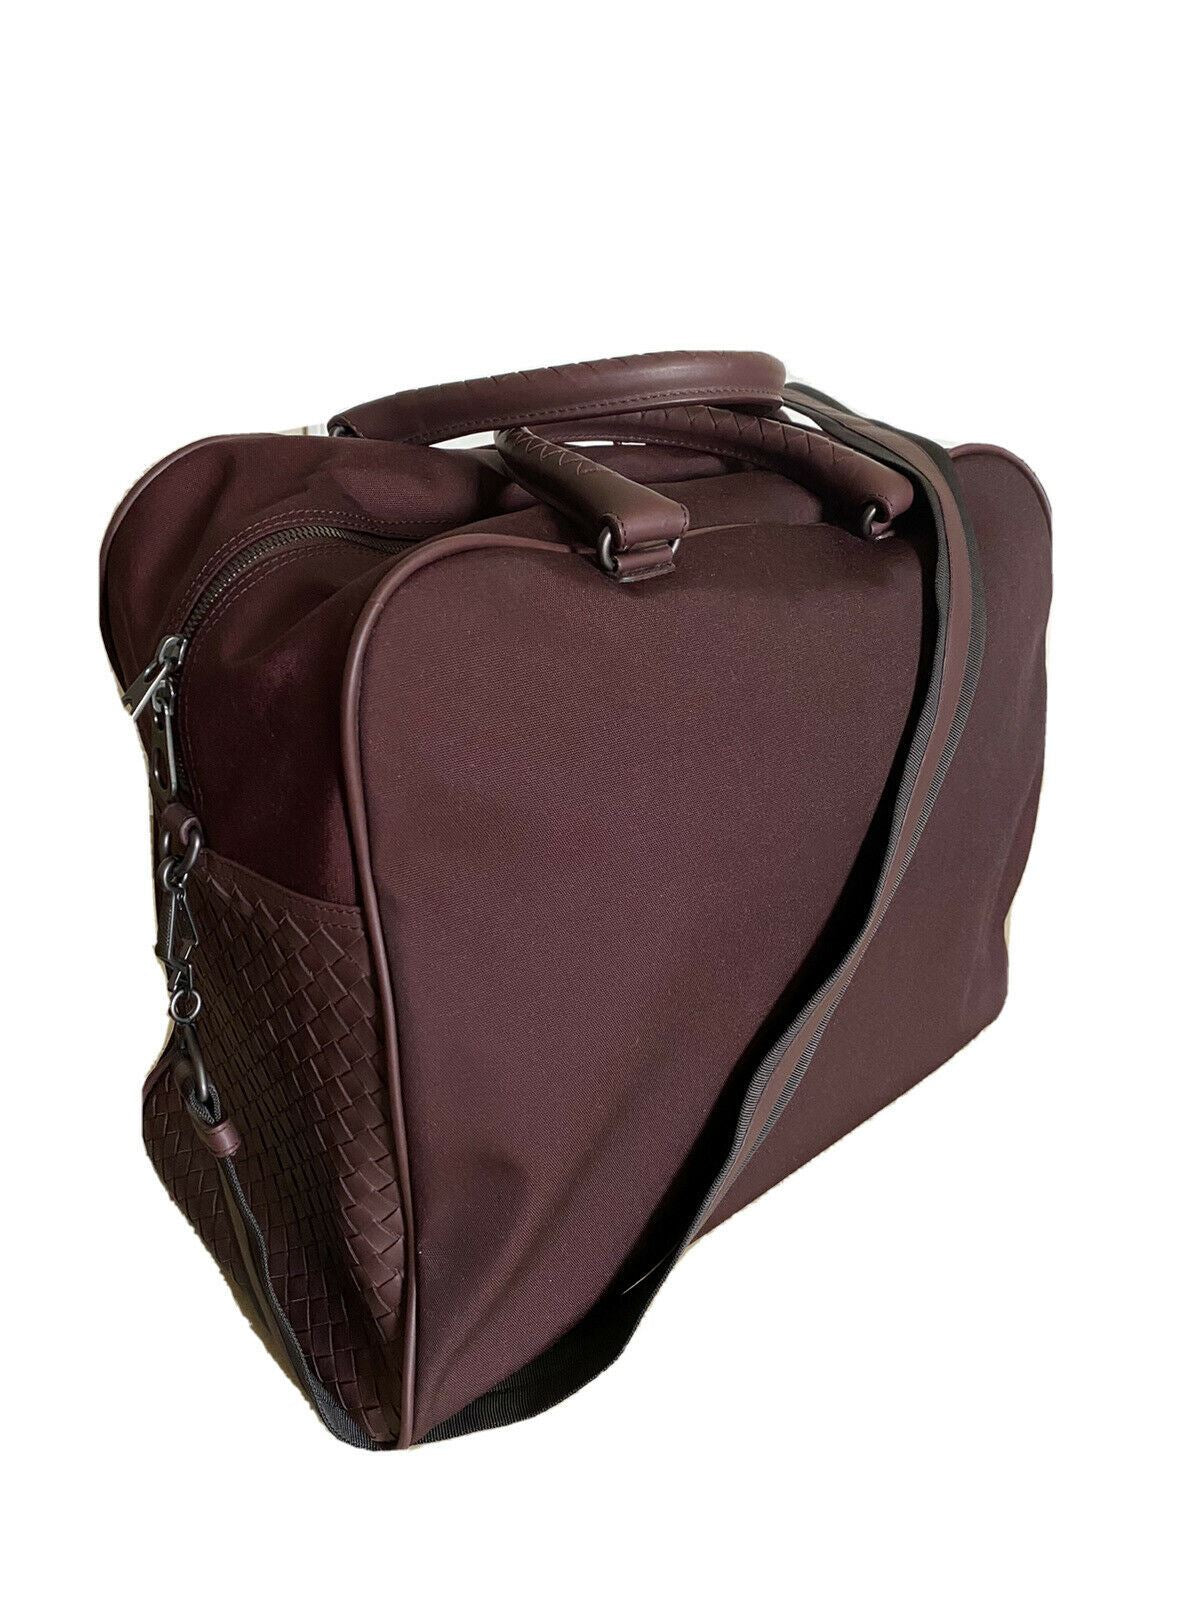 New $2750 Bottega Veneta Men Leather/Canvas Travel Bag Burgundy Italy